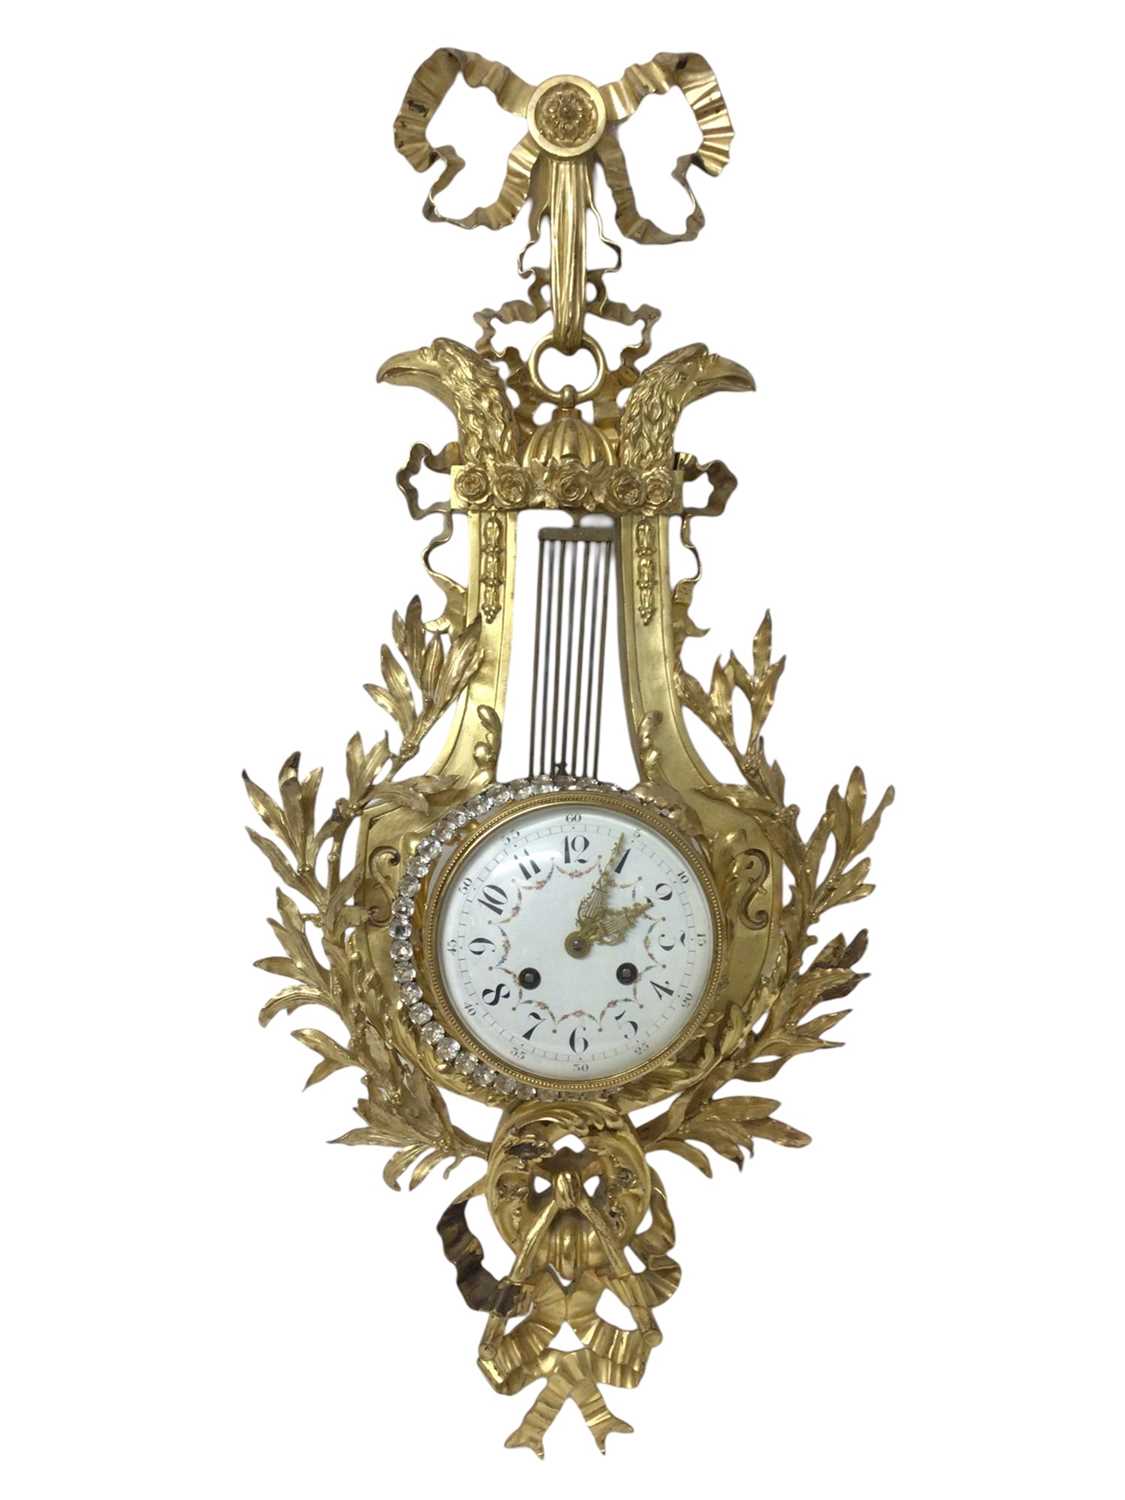 Good quality 19th century French Louis XVI-style ormolu cartel clock